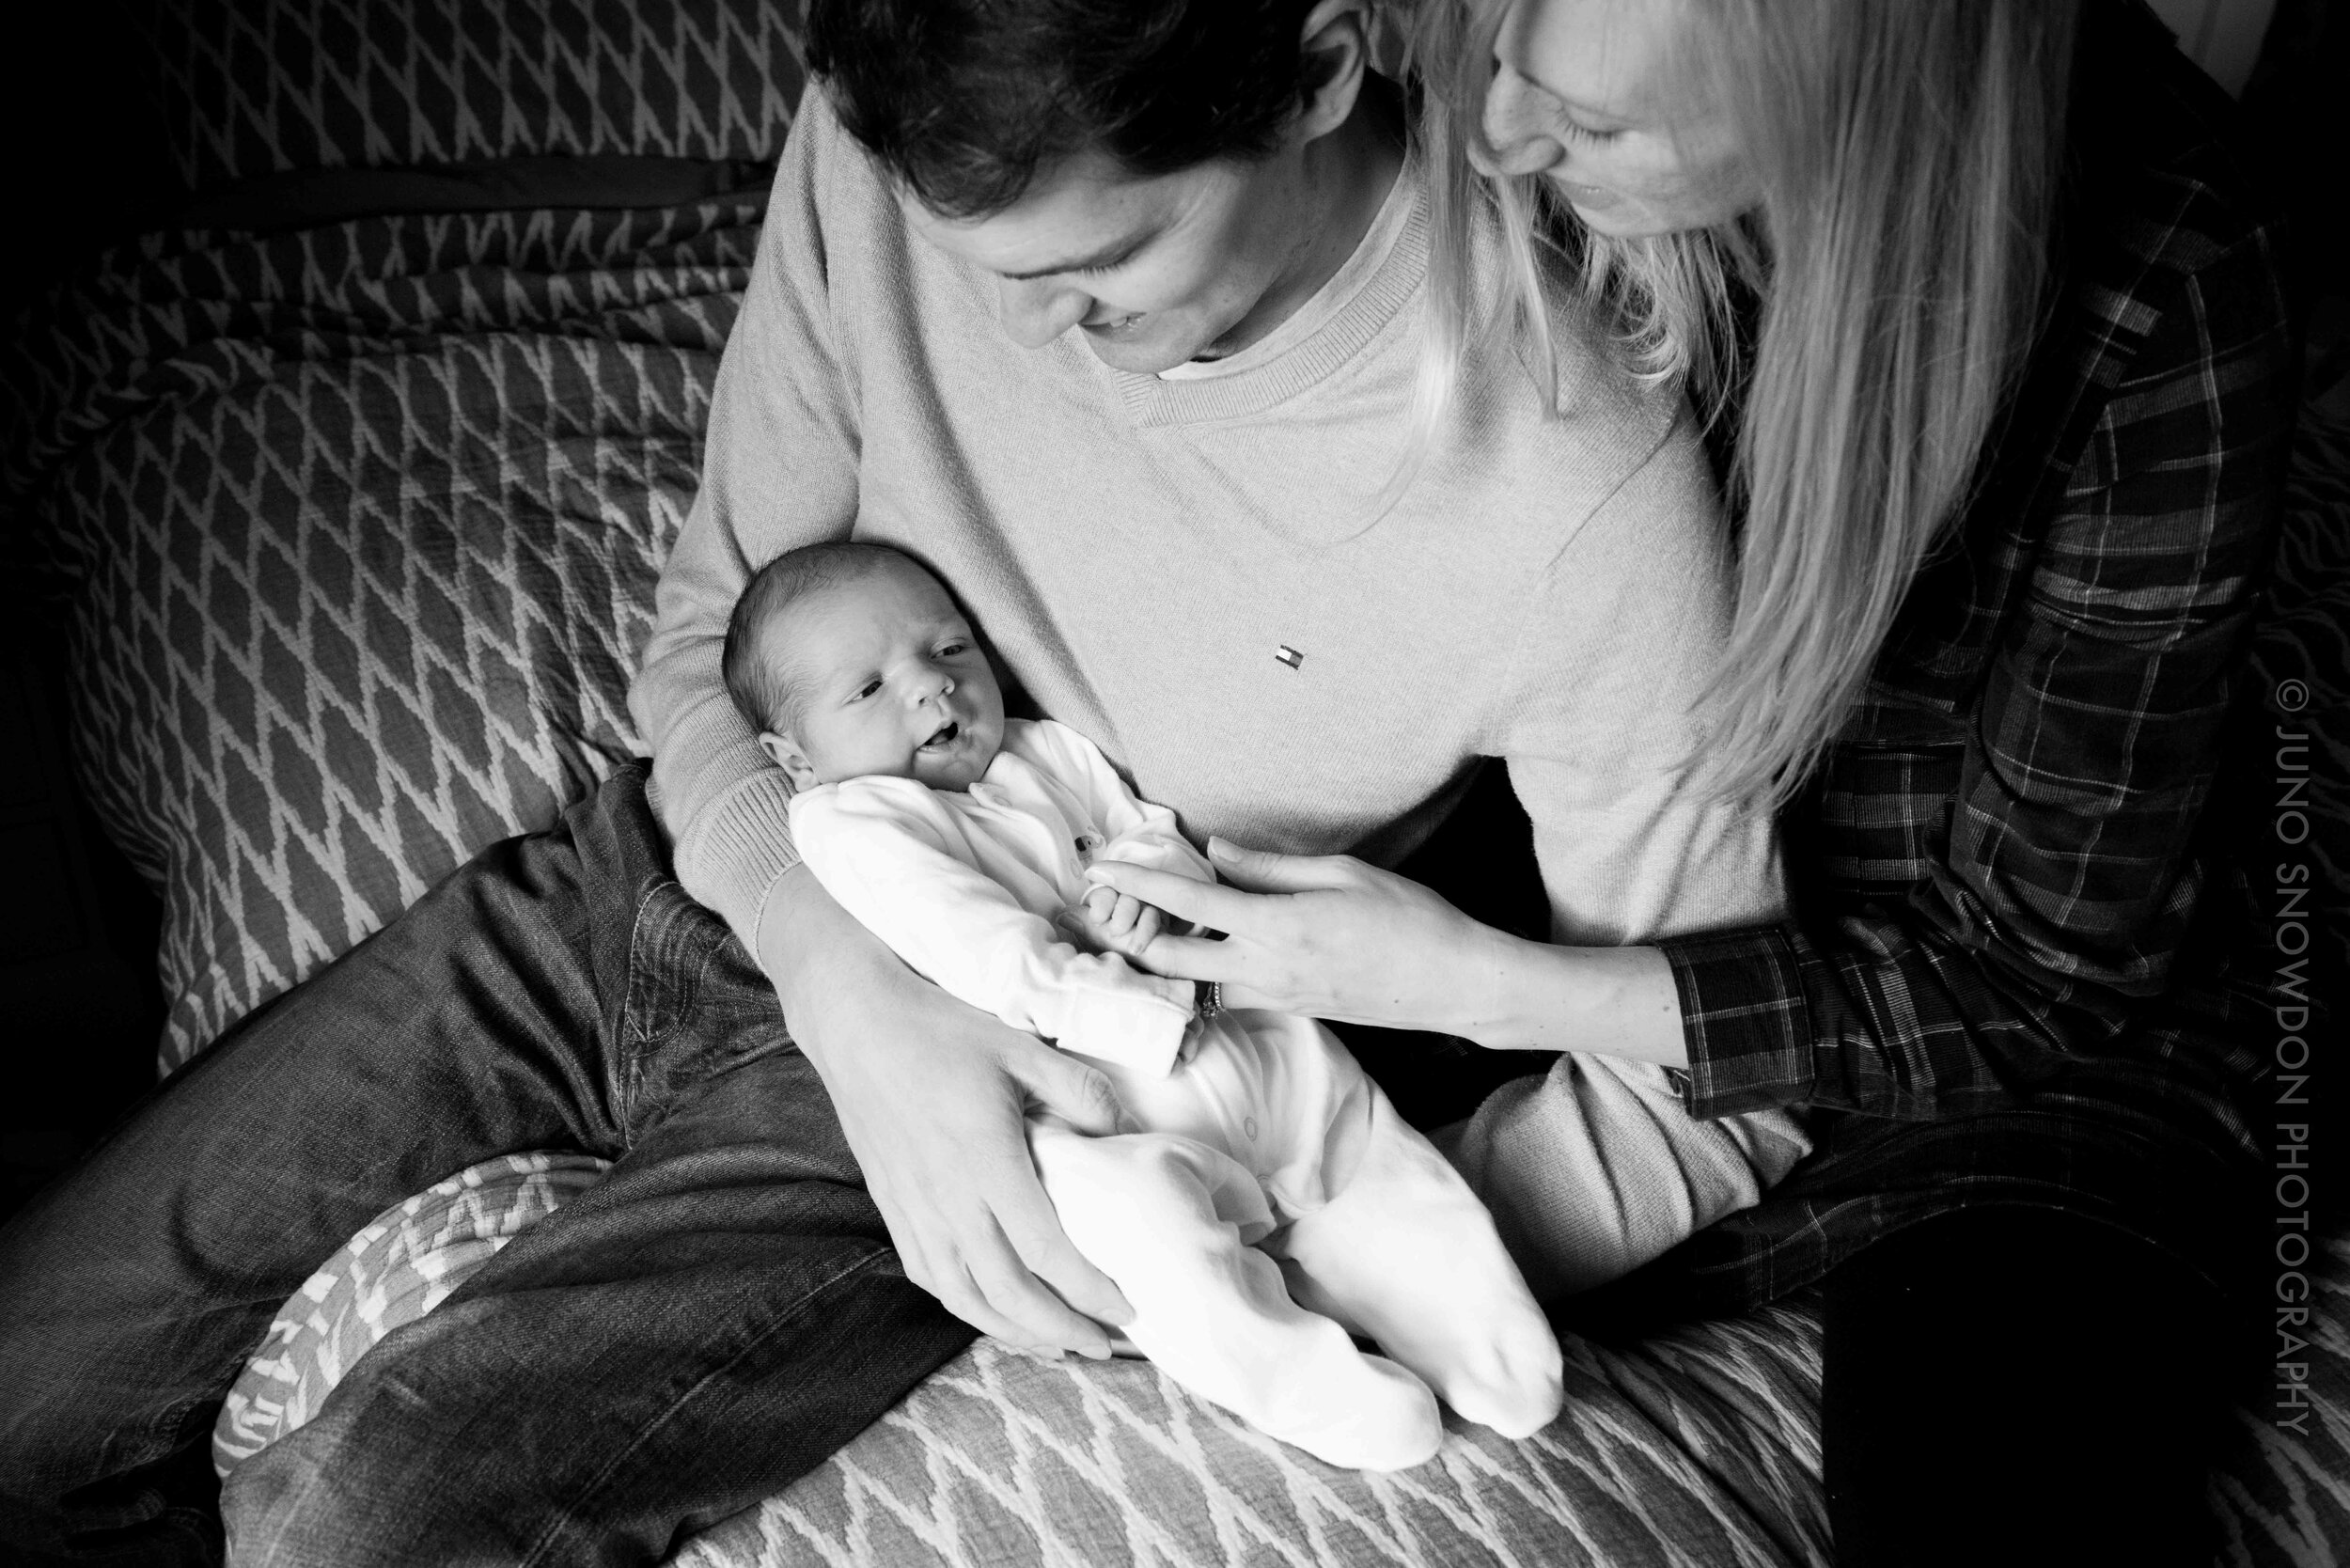 juno-snowdon-photography-newborn-family-portraits-london-3508.jpg